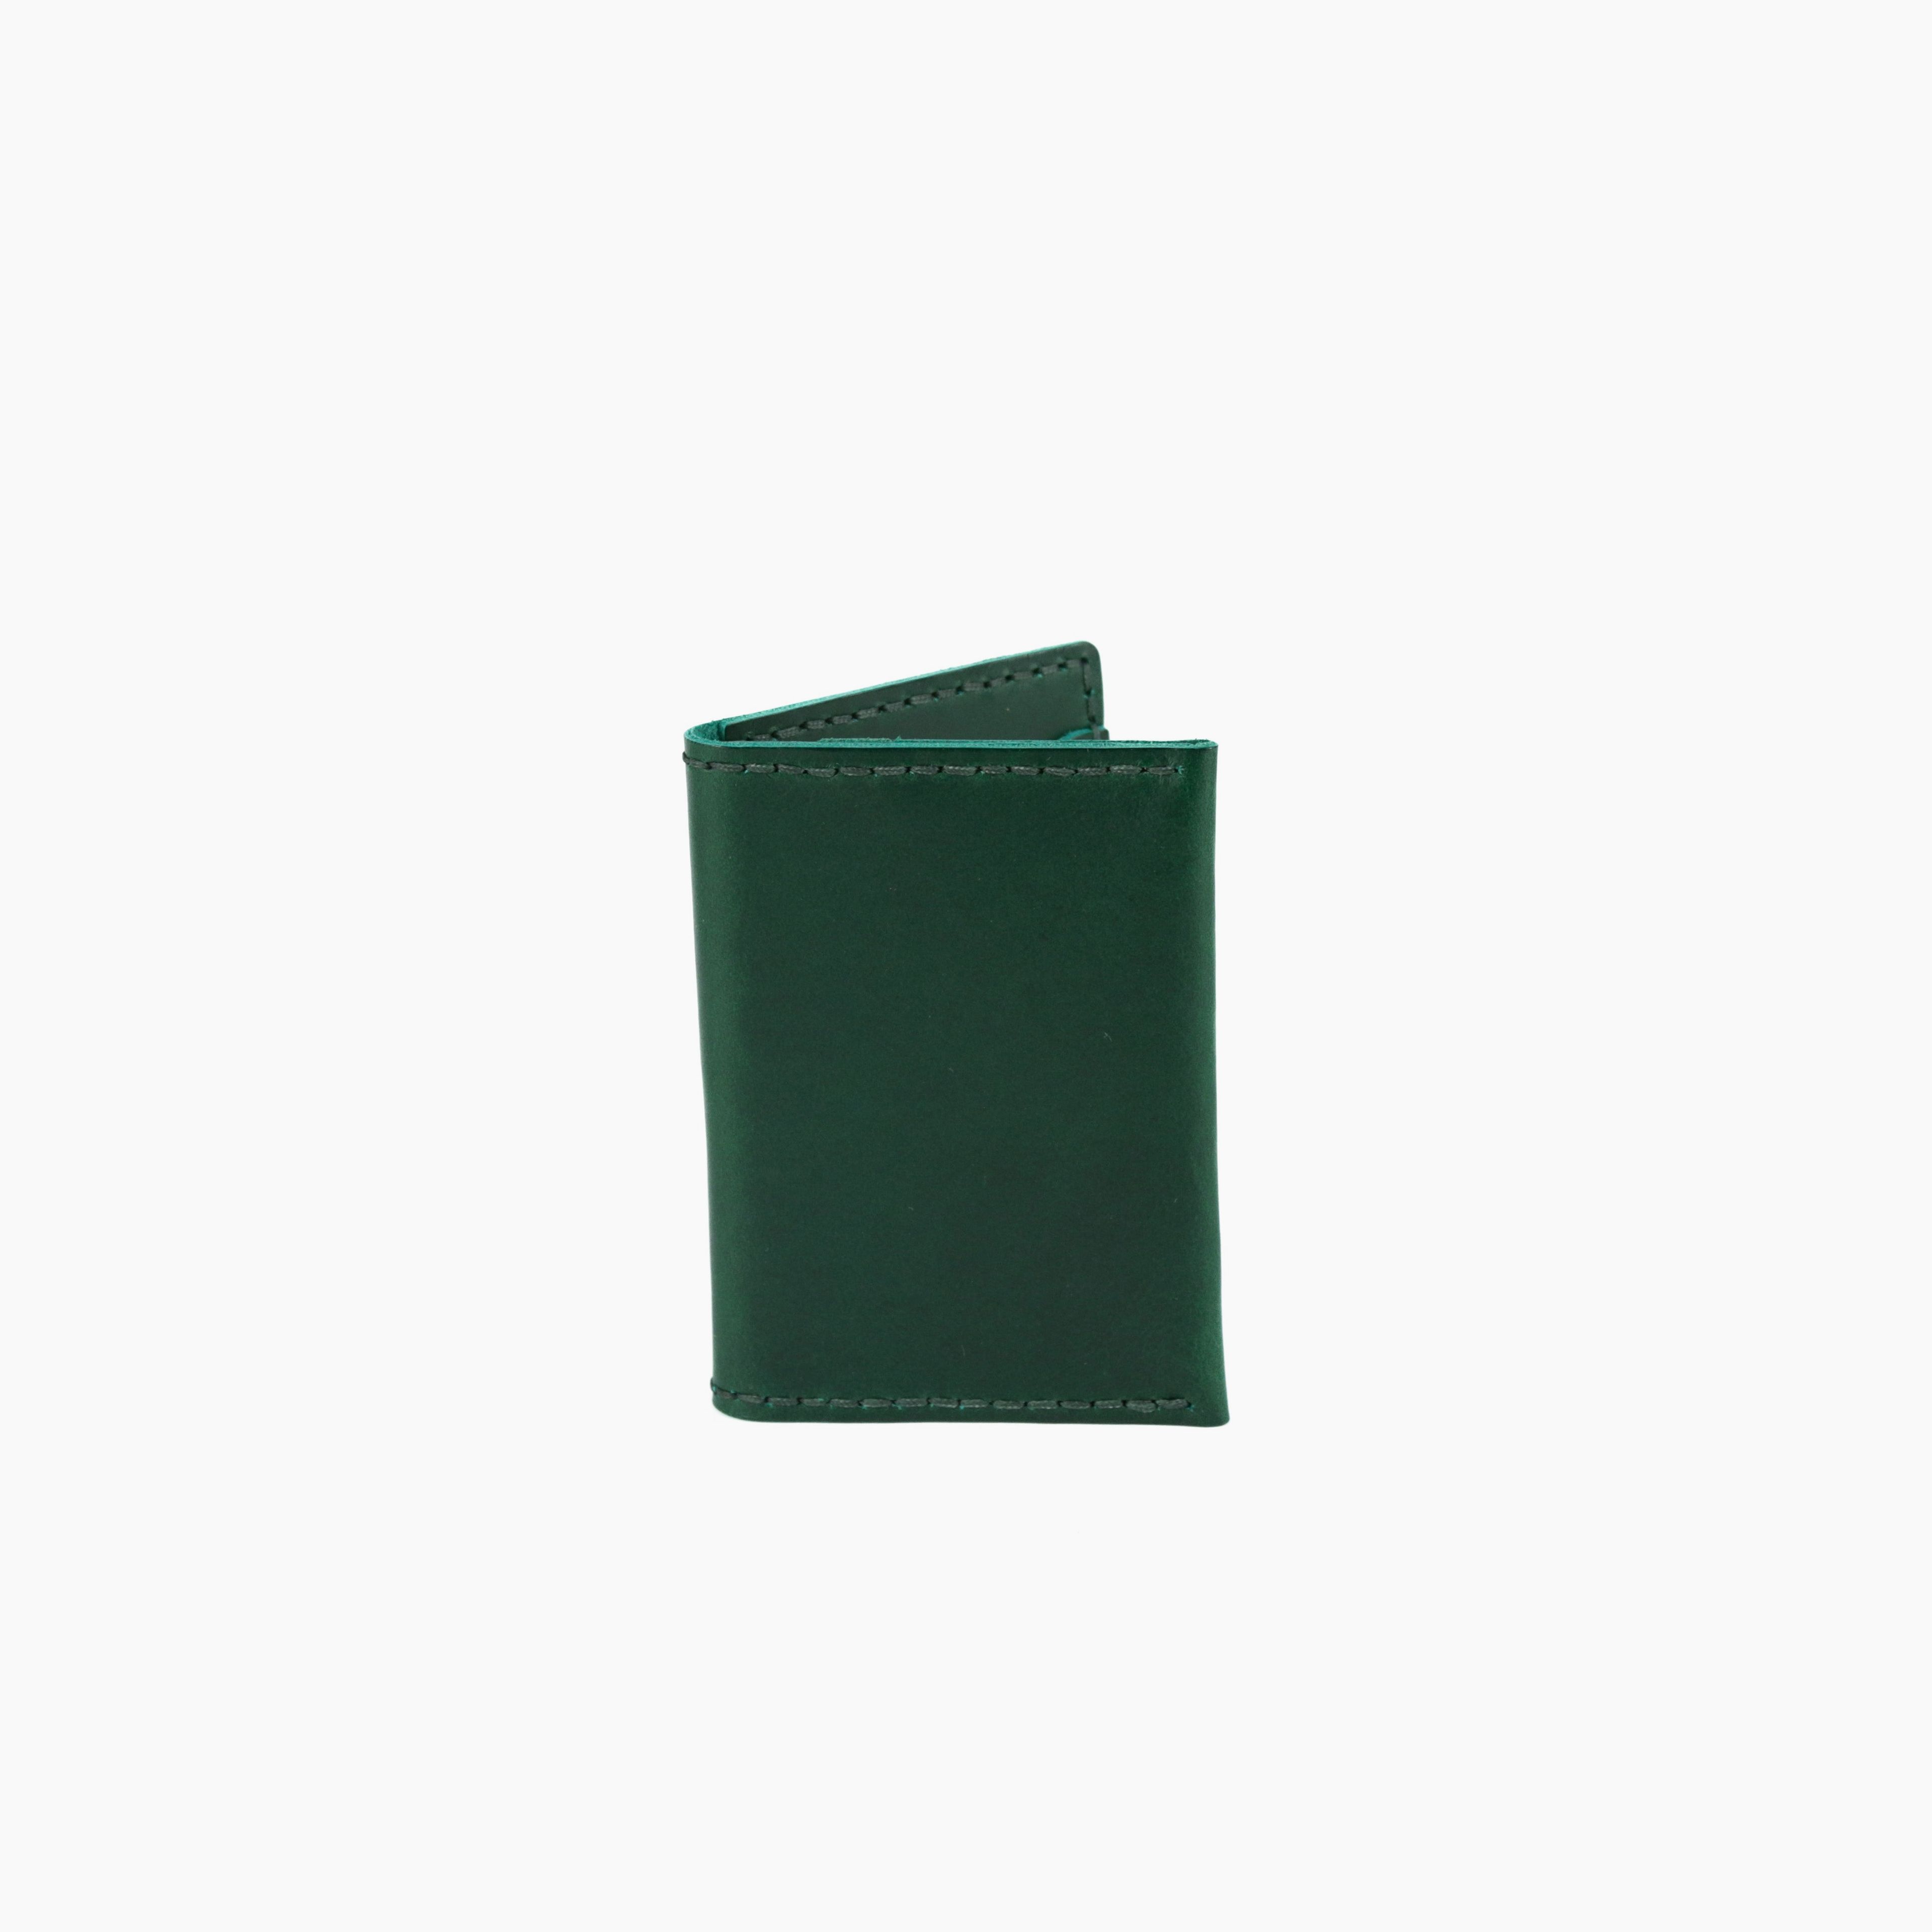 Essex Wallet: Emerald